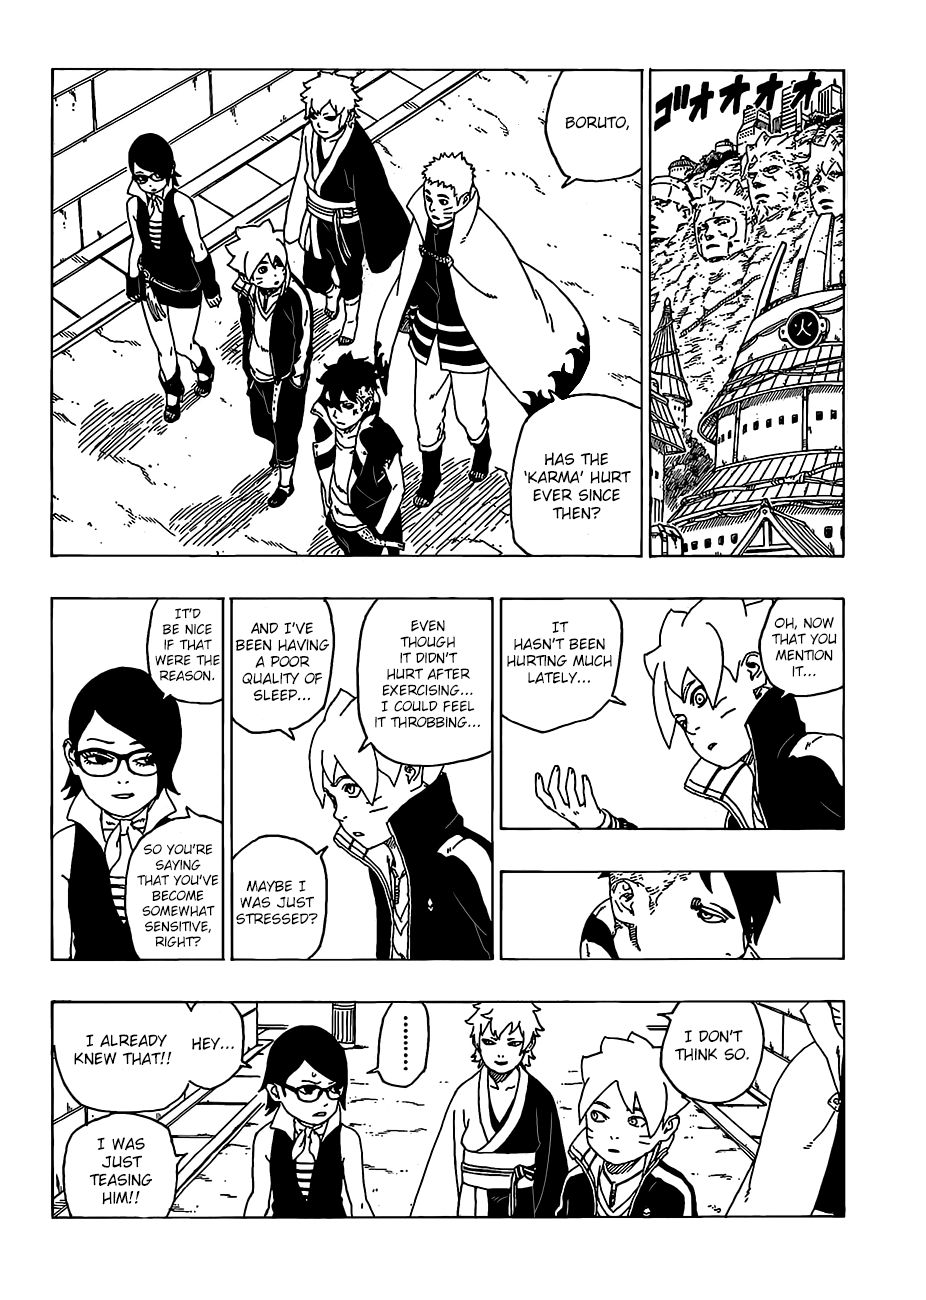 Boruto Manga Manga Chapter - 35 - image 25